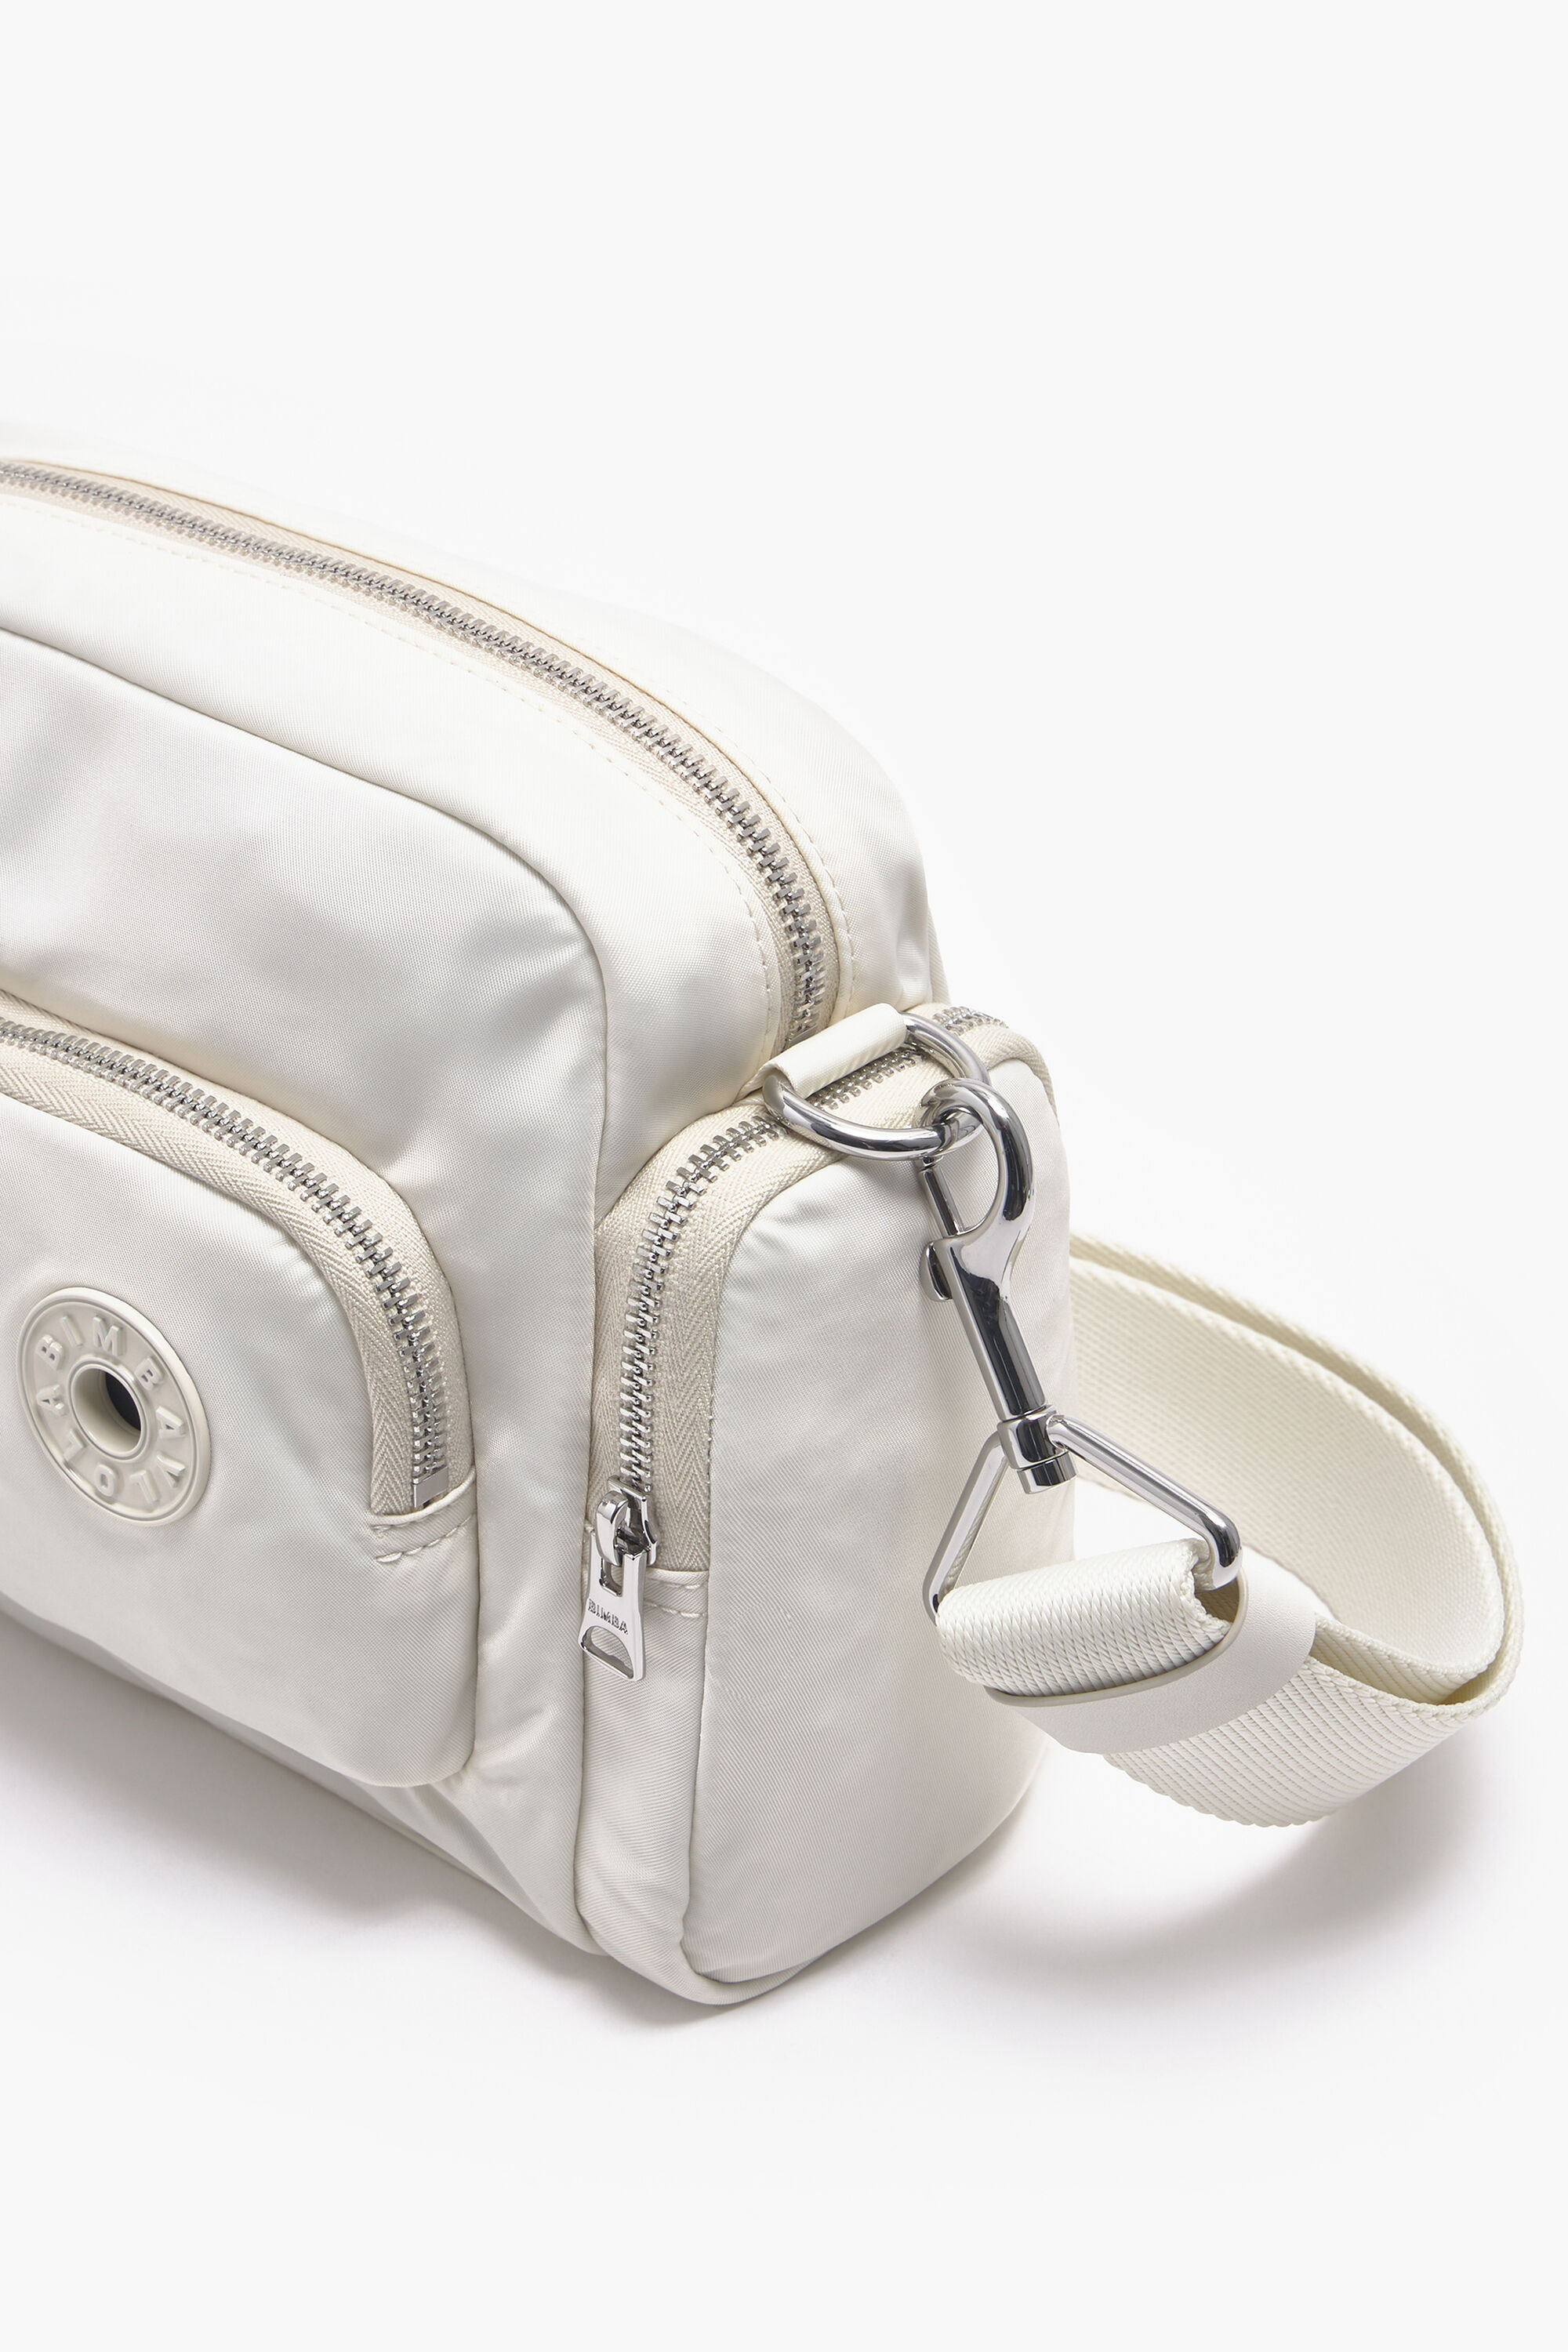 Bimba Y Lola Medium Ivory Nylon Crossbody Bag – Balilene